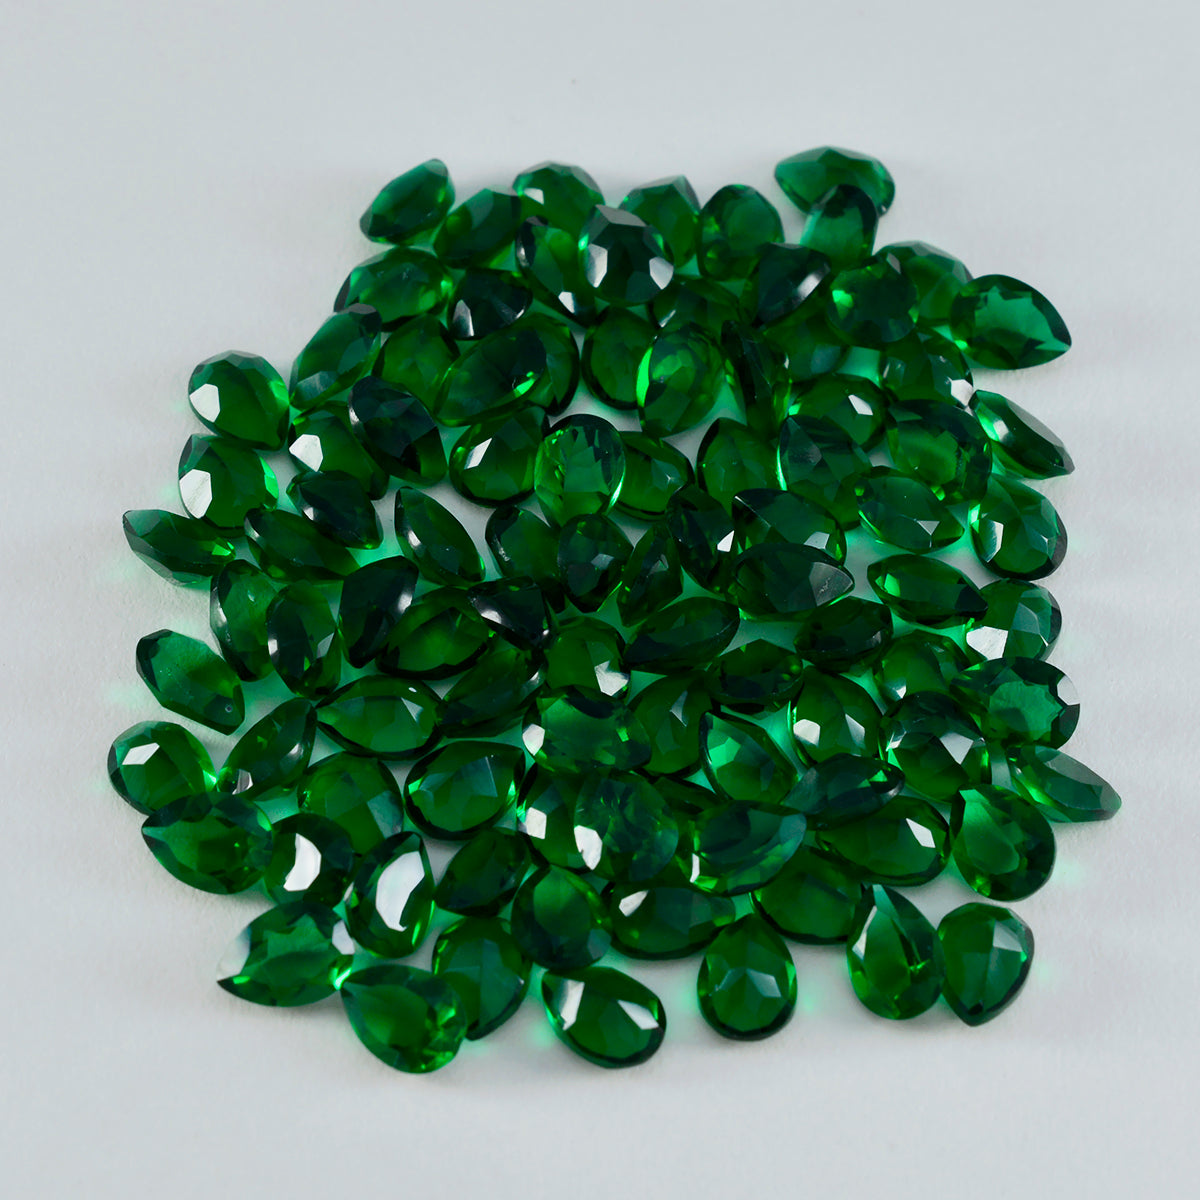 Riyogems 1PC Green Emerald CZ Faceted 4x6 mm Pear Shape handsome Quality Loose Gemstone